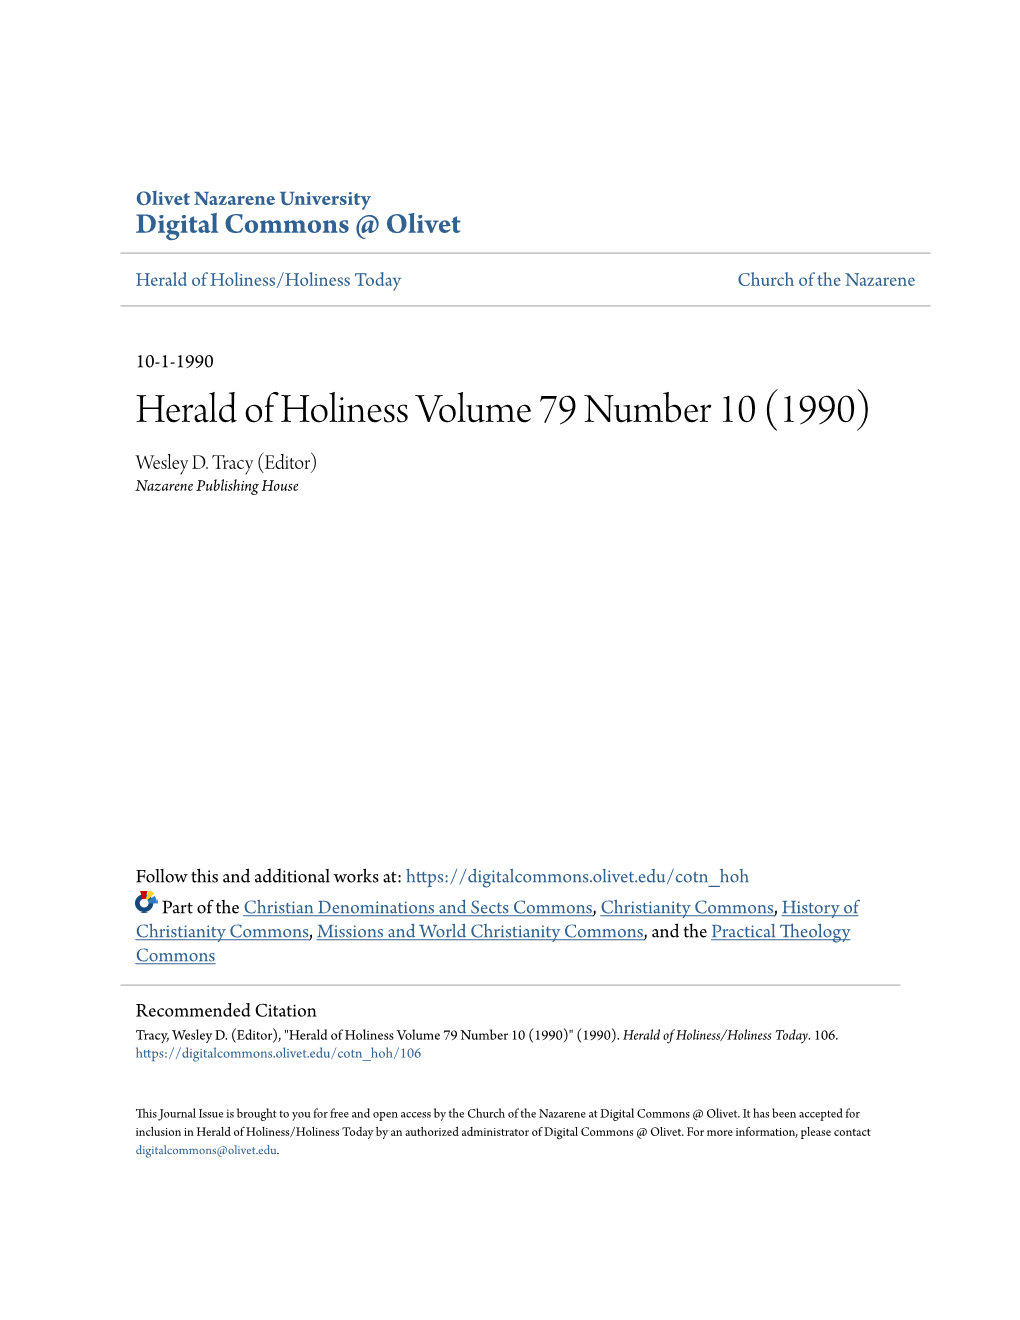 Herald of Holiness Volume 79 Number 10 (1990) Wesley D